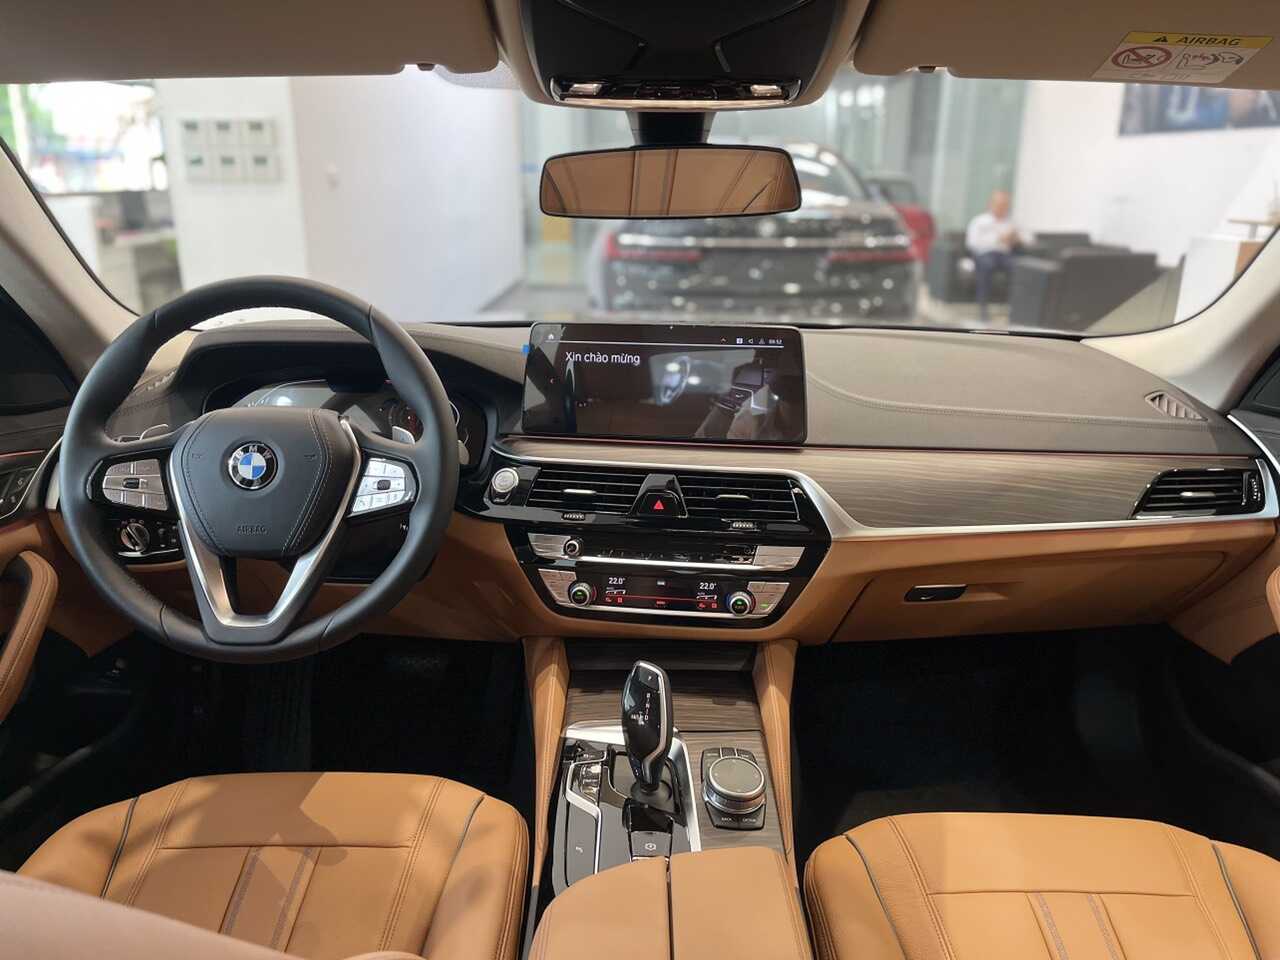 Nội thất BMW 520i Luxury - màu da Cognac.